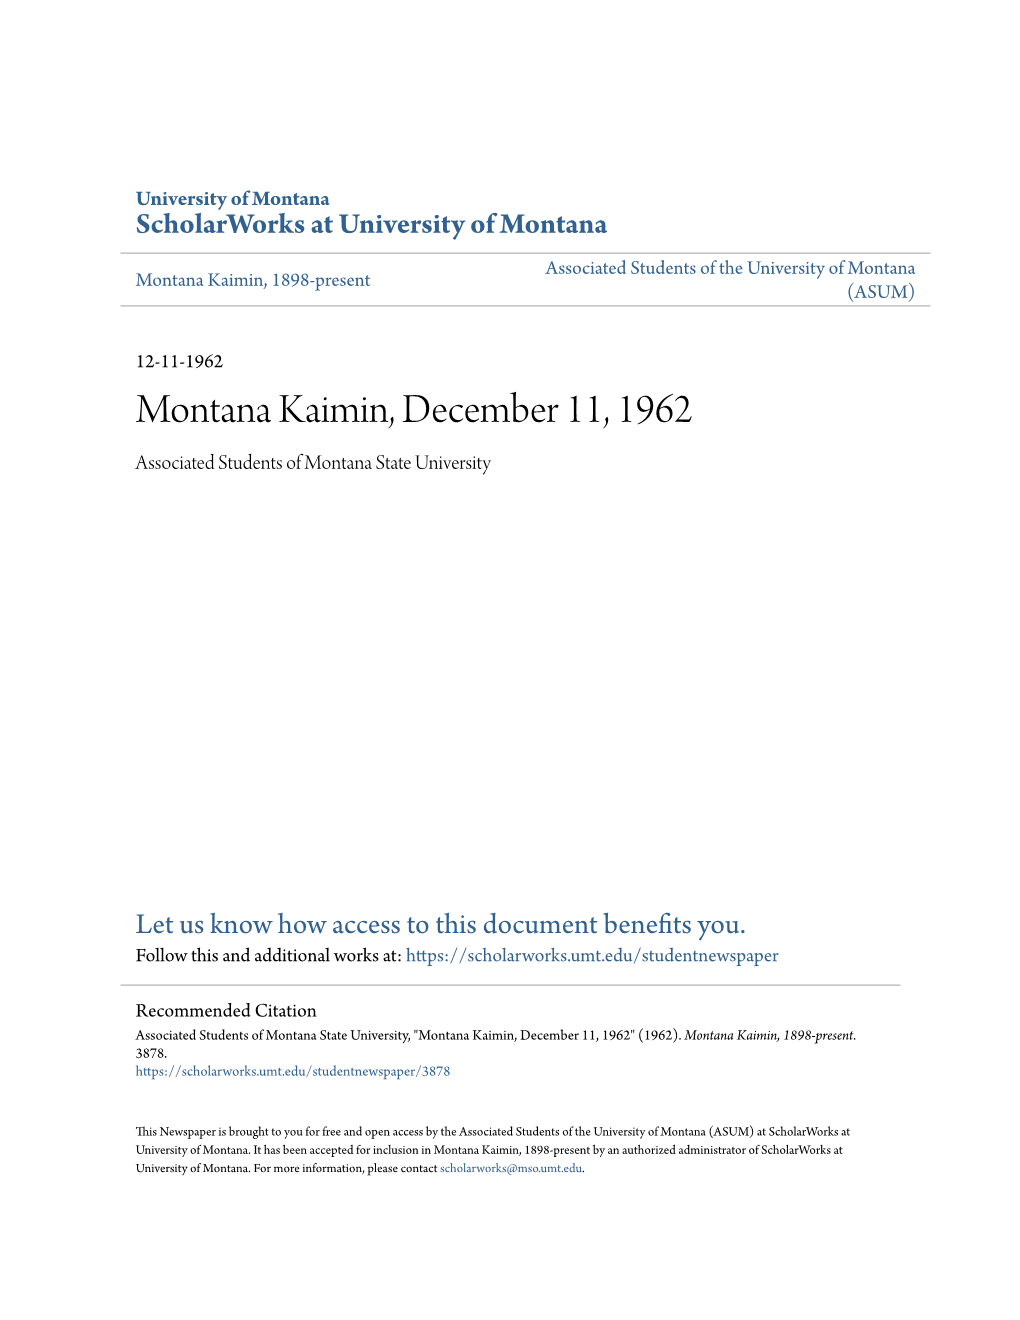 Montana Kaimin, December 11, 1962 Associated Students of Montana State University